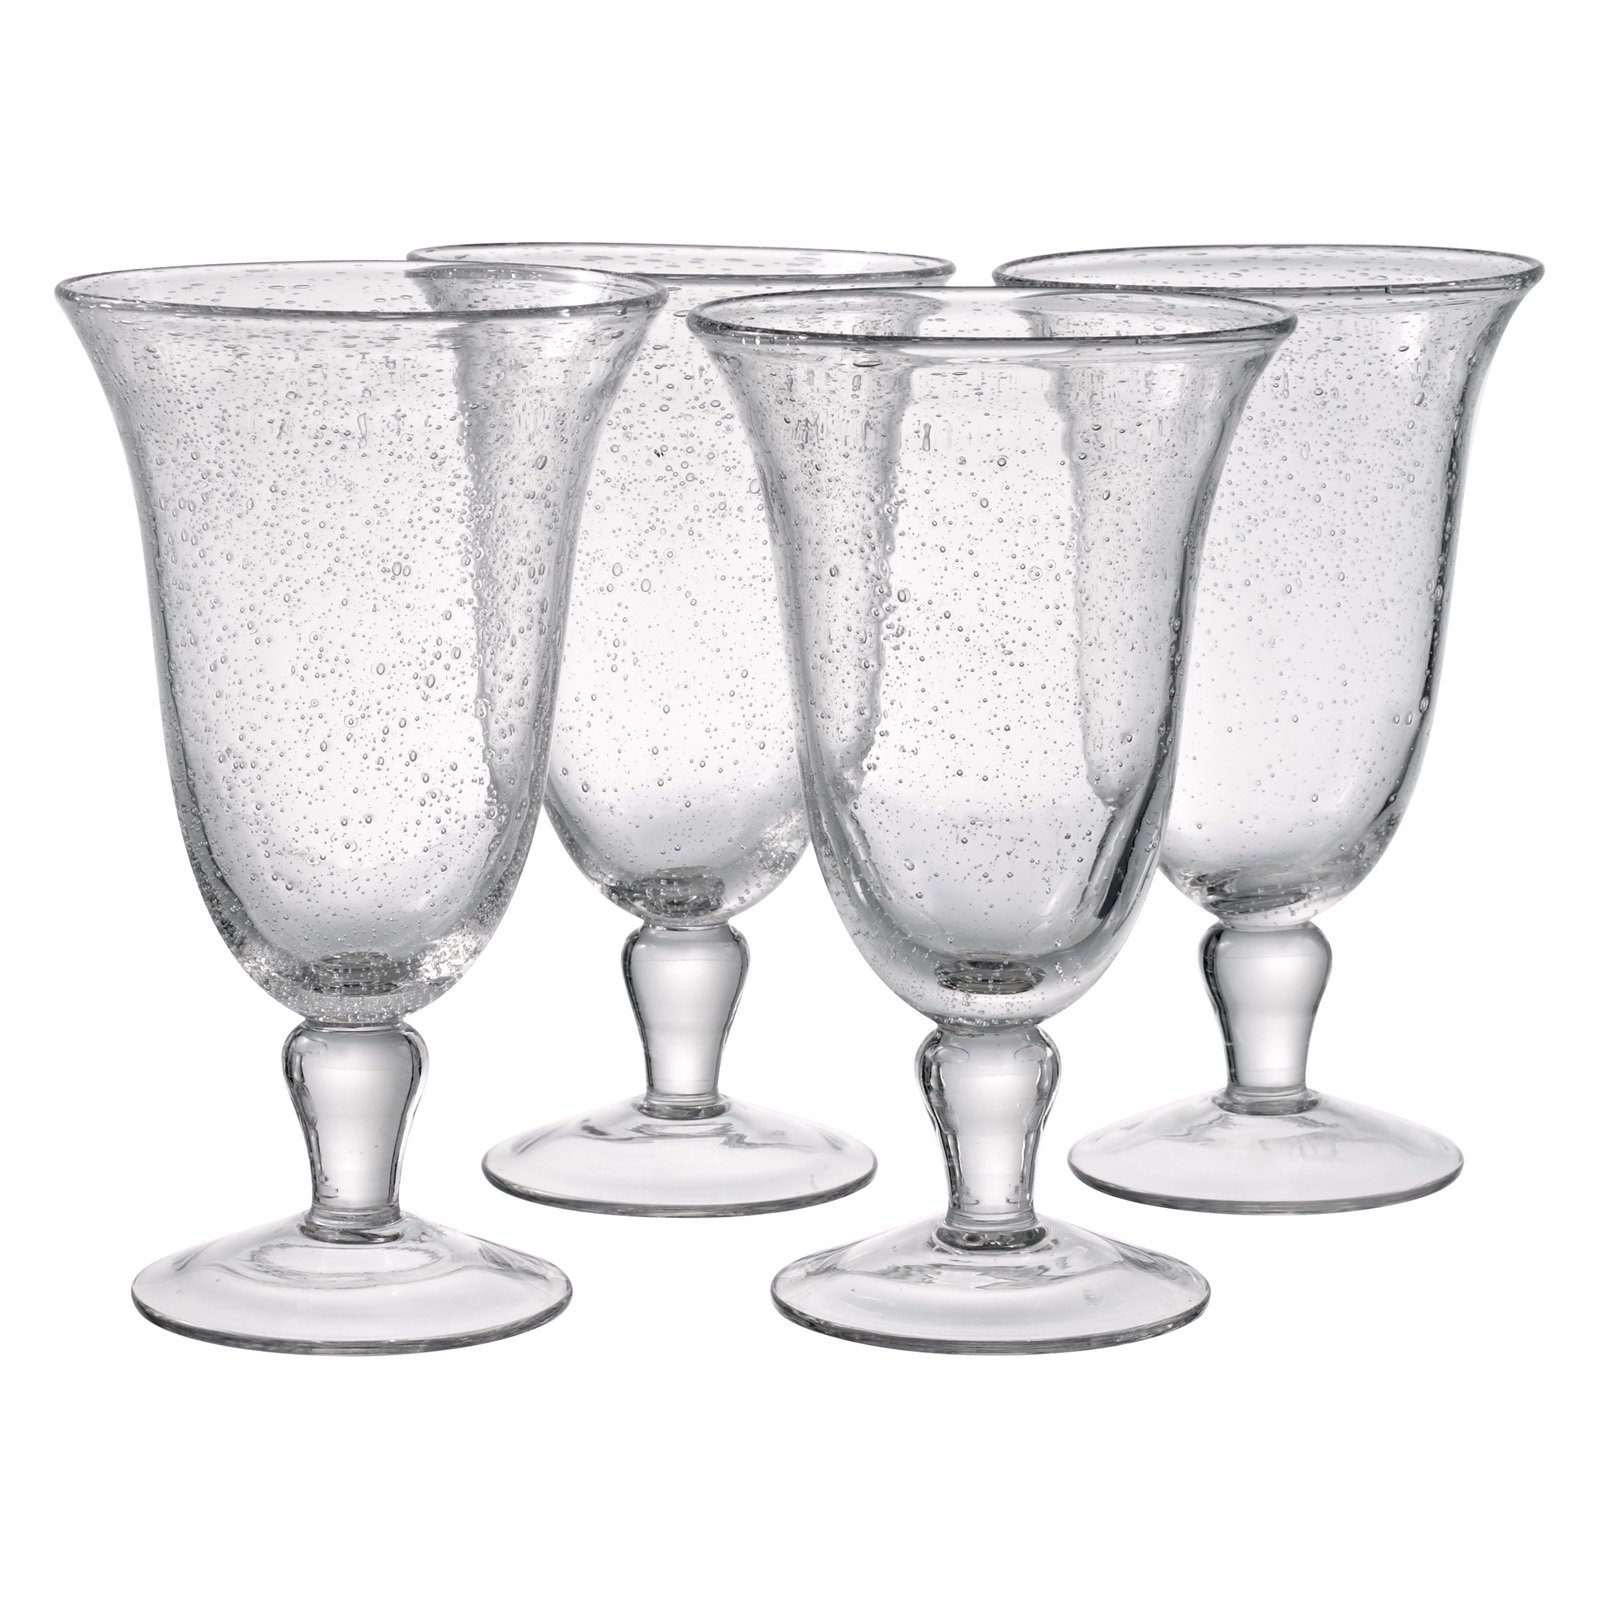 Artland Inc. Iris Ice Tea Glasses - Set of 4 - image 2 of 2